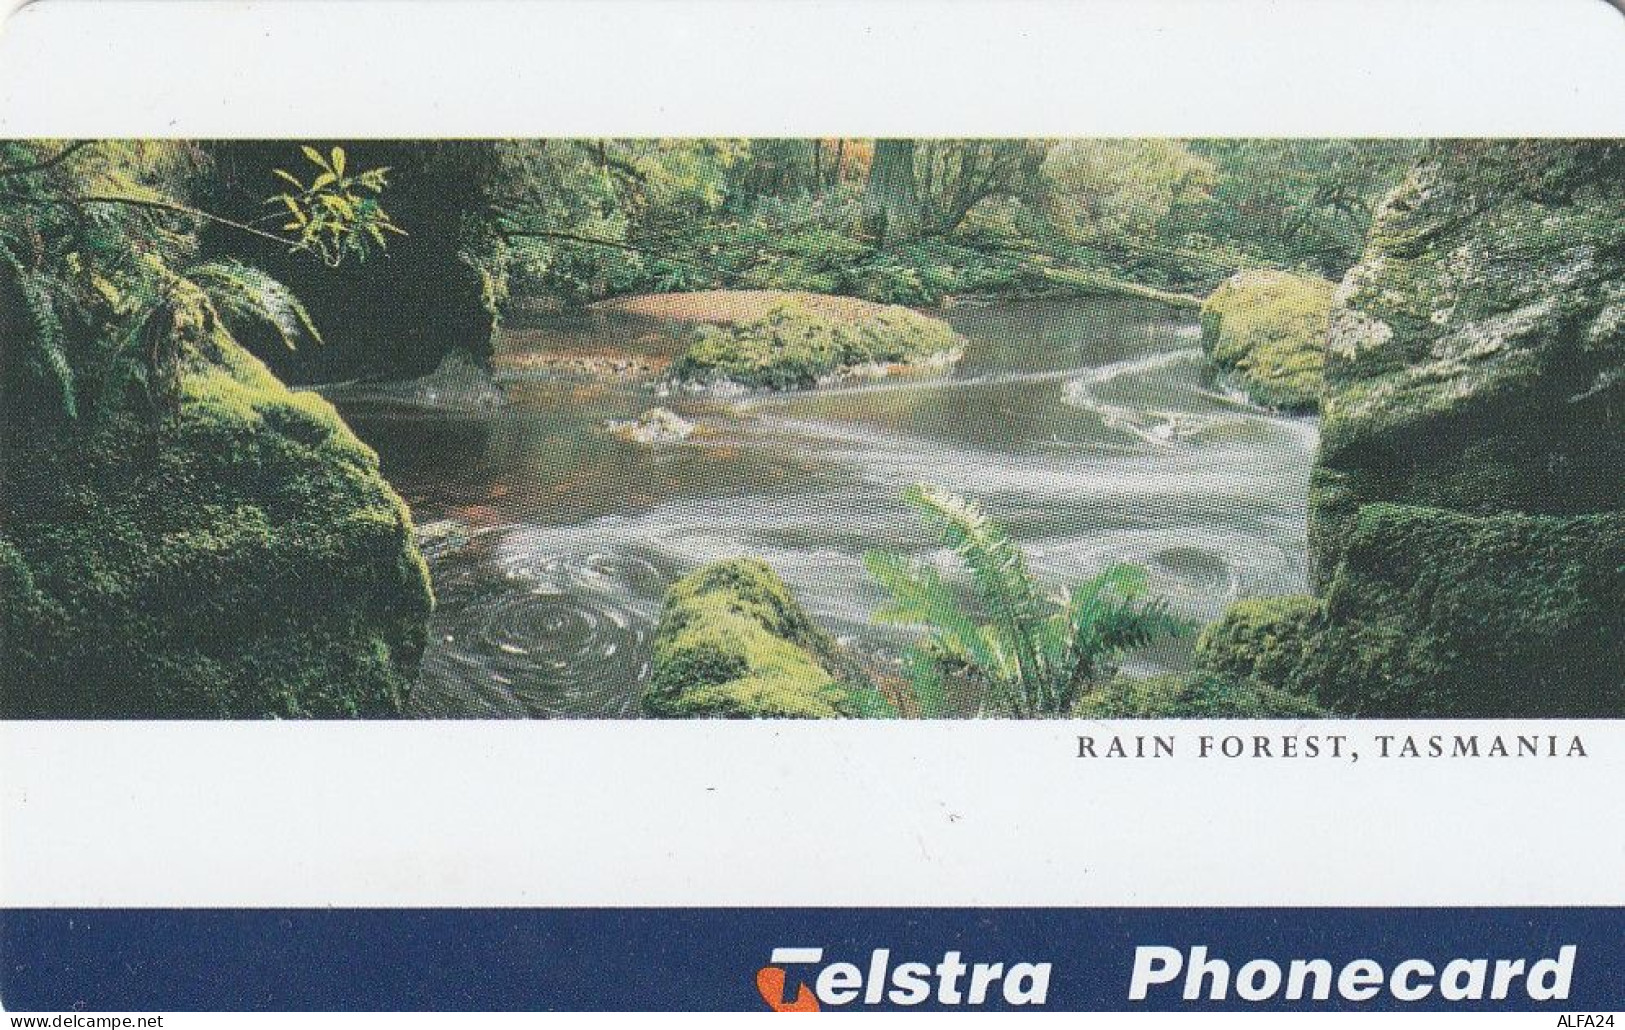 PHONE CARD AUSTRALIA  (CZ606 - Australie